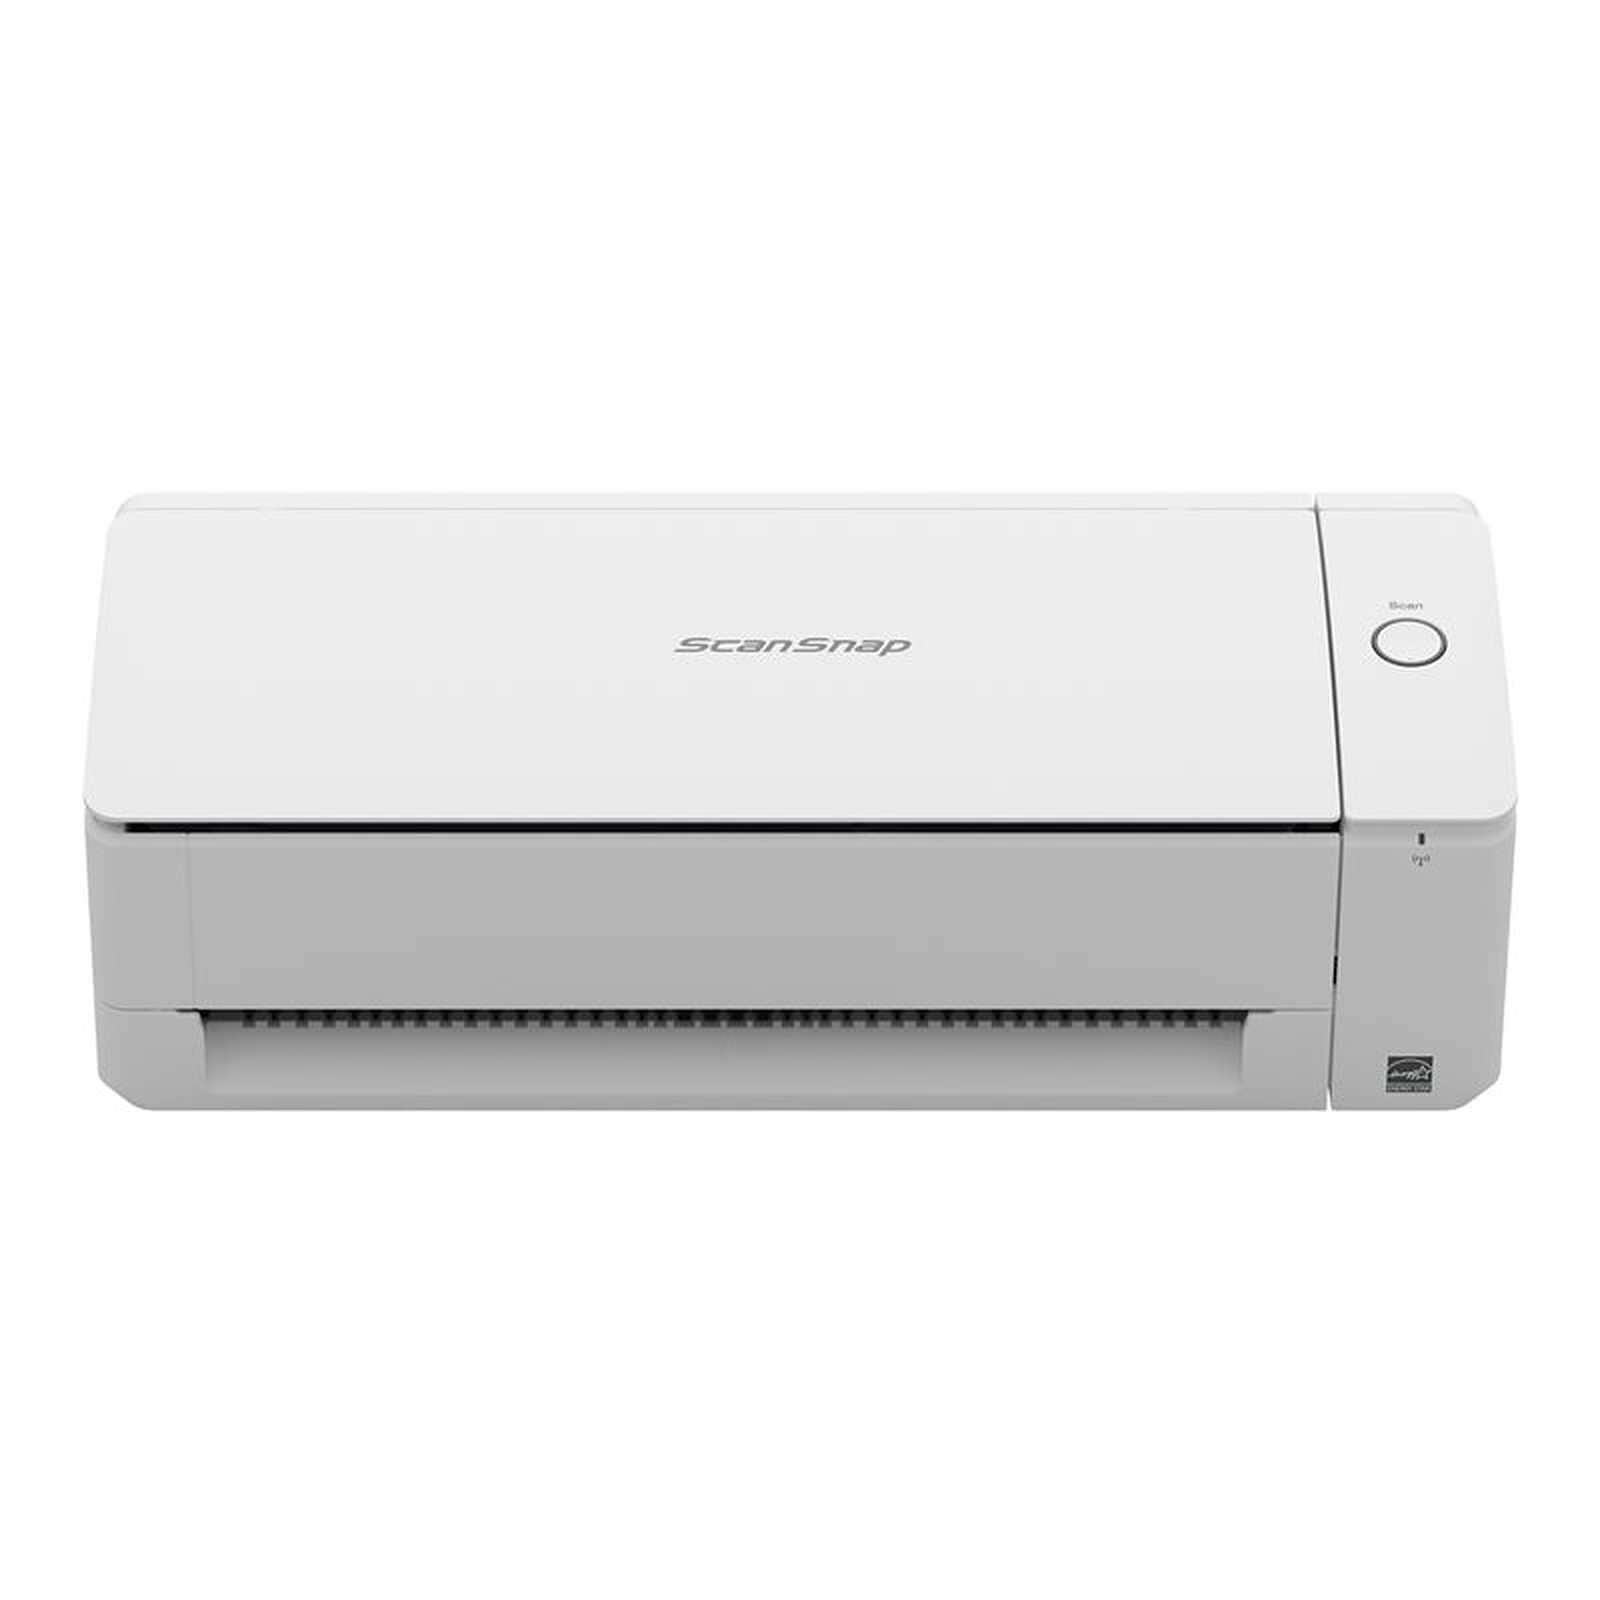 HP Scanjet Pro 2000 s2 - Scanner - Garantie 3 ans LDLC